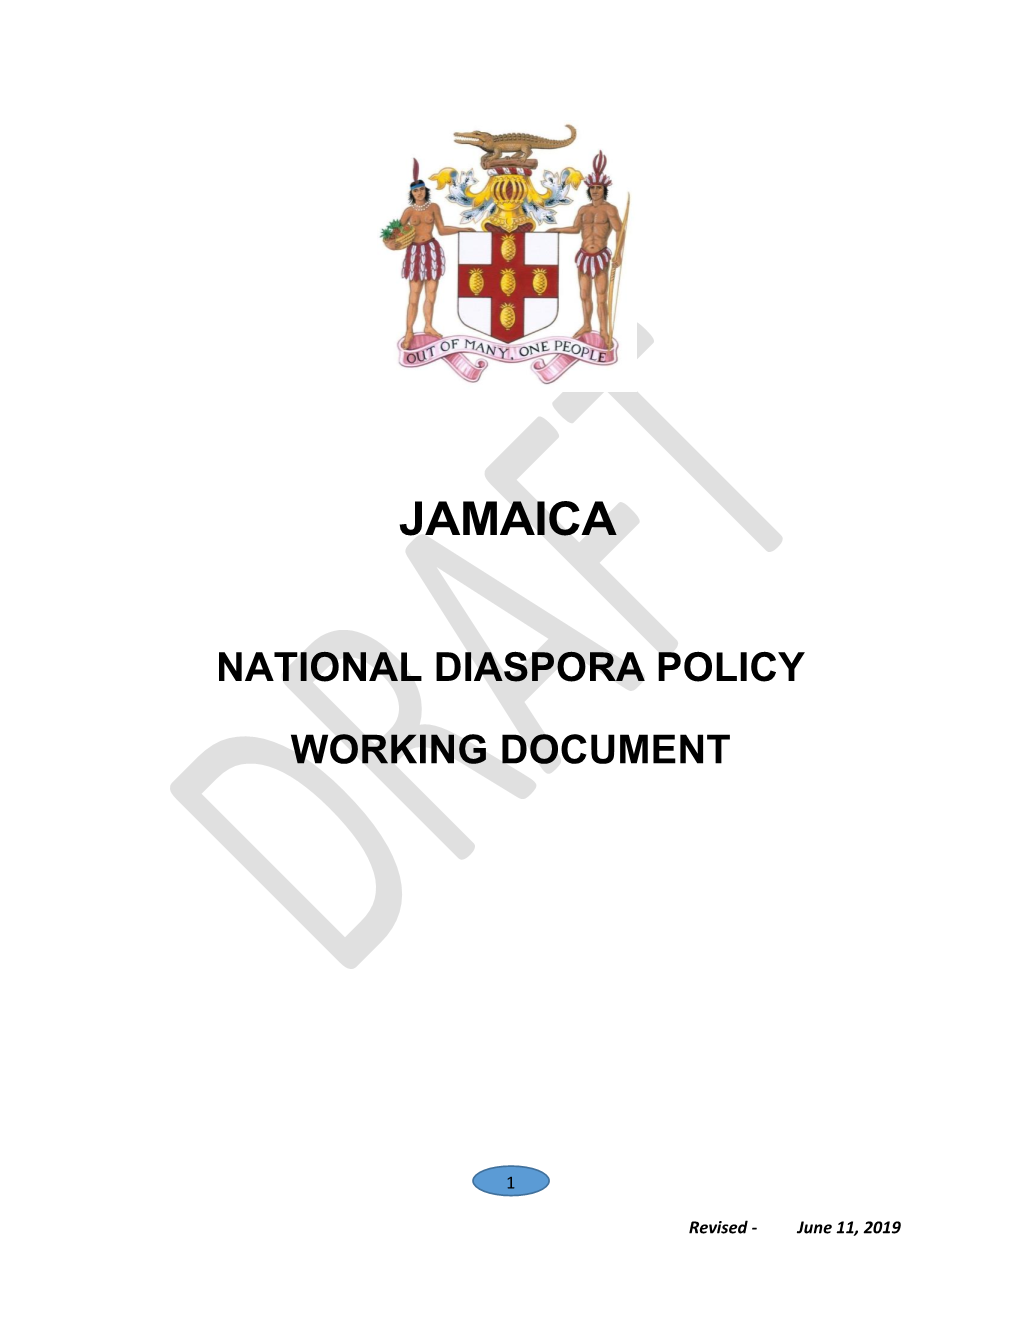 National Diaspora Policy Working Document